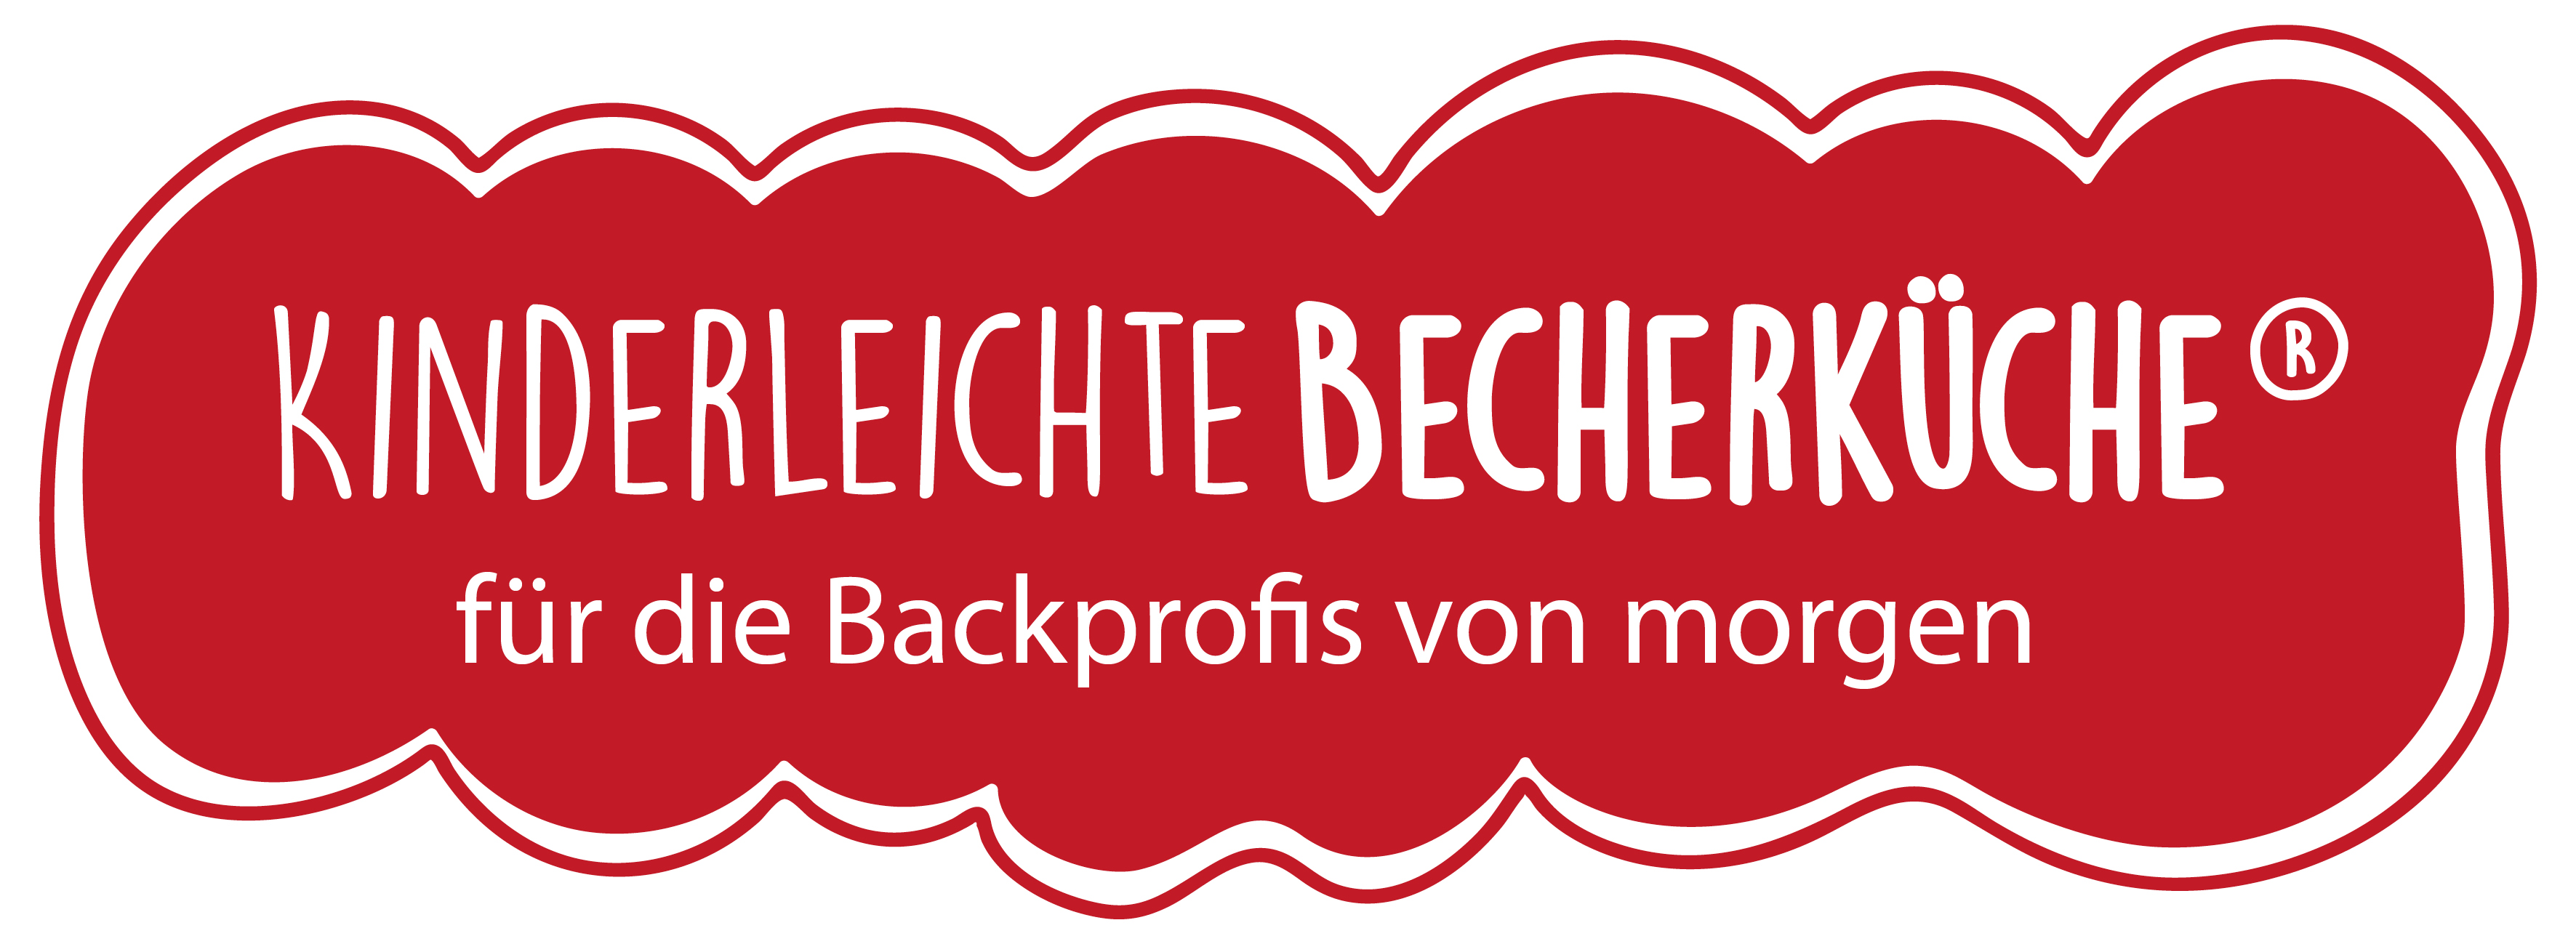 RoteWolke_Becherkueche_Backprofis